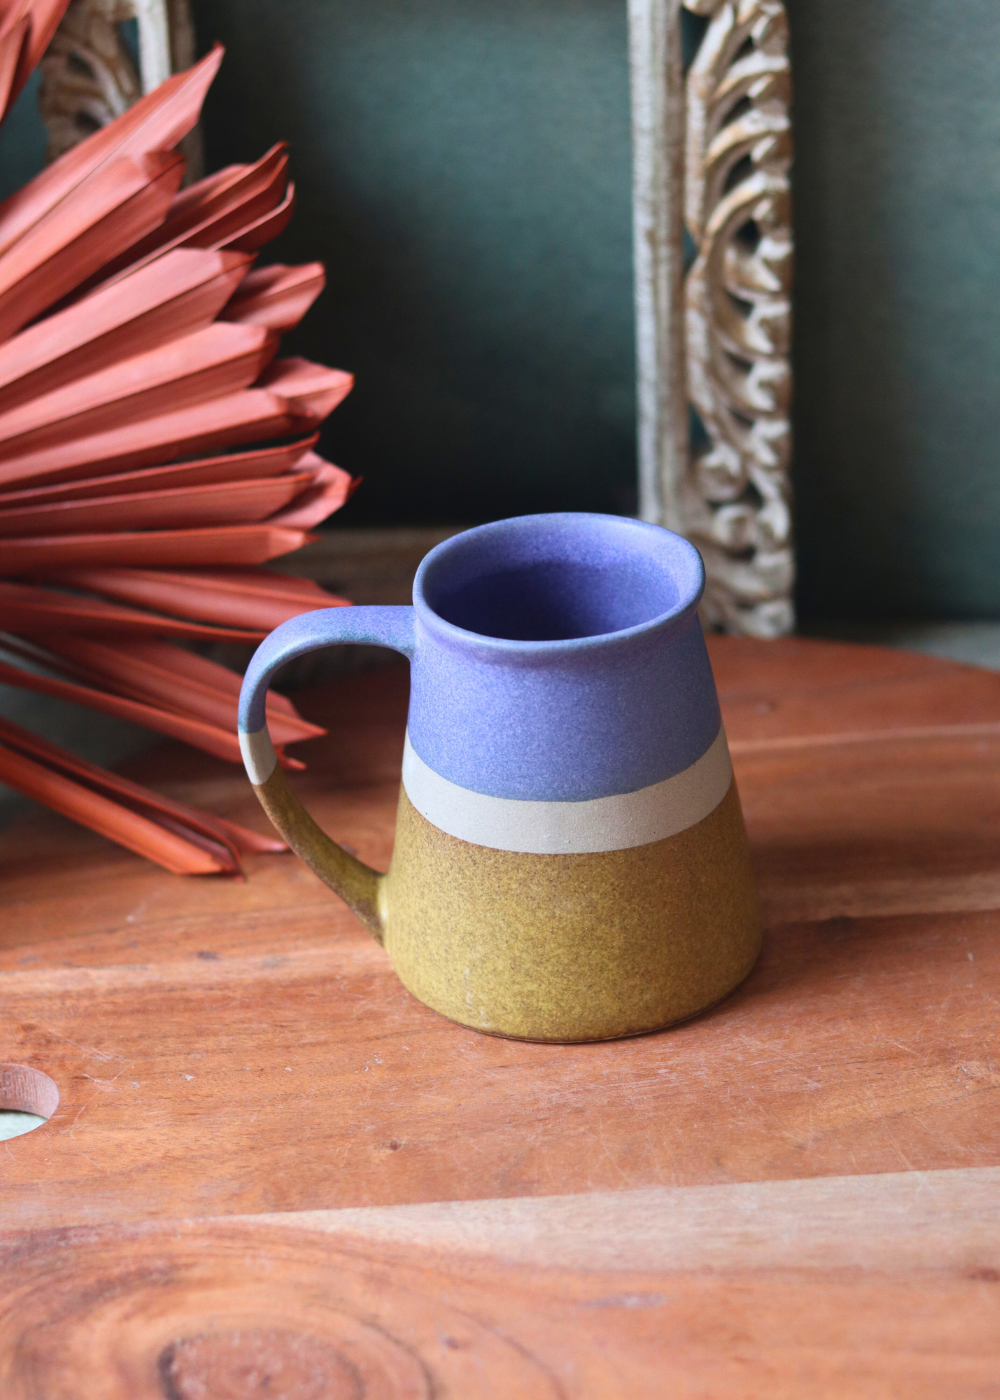 Blue & Mustard coffee mug on wooden surface